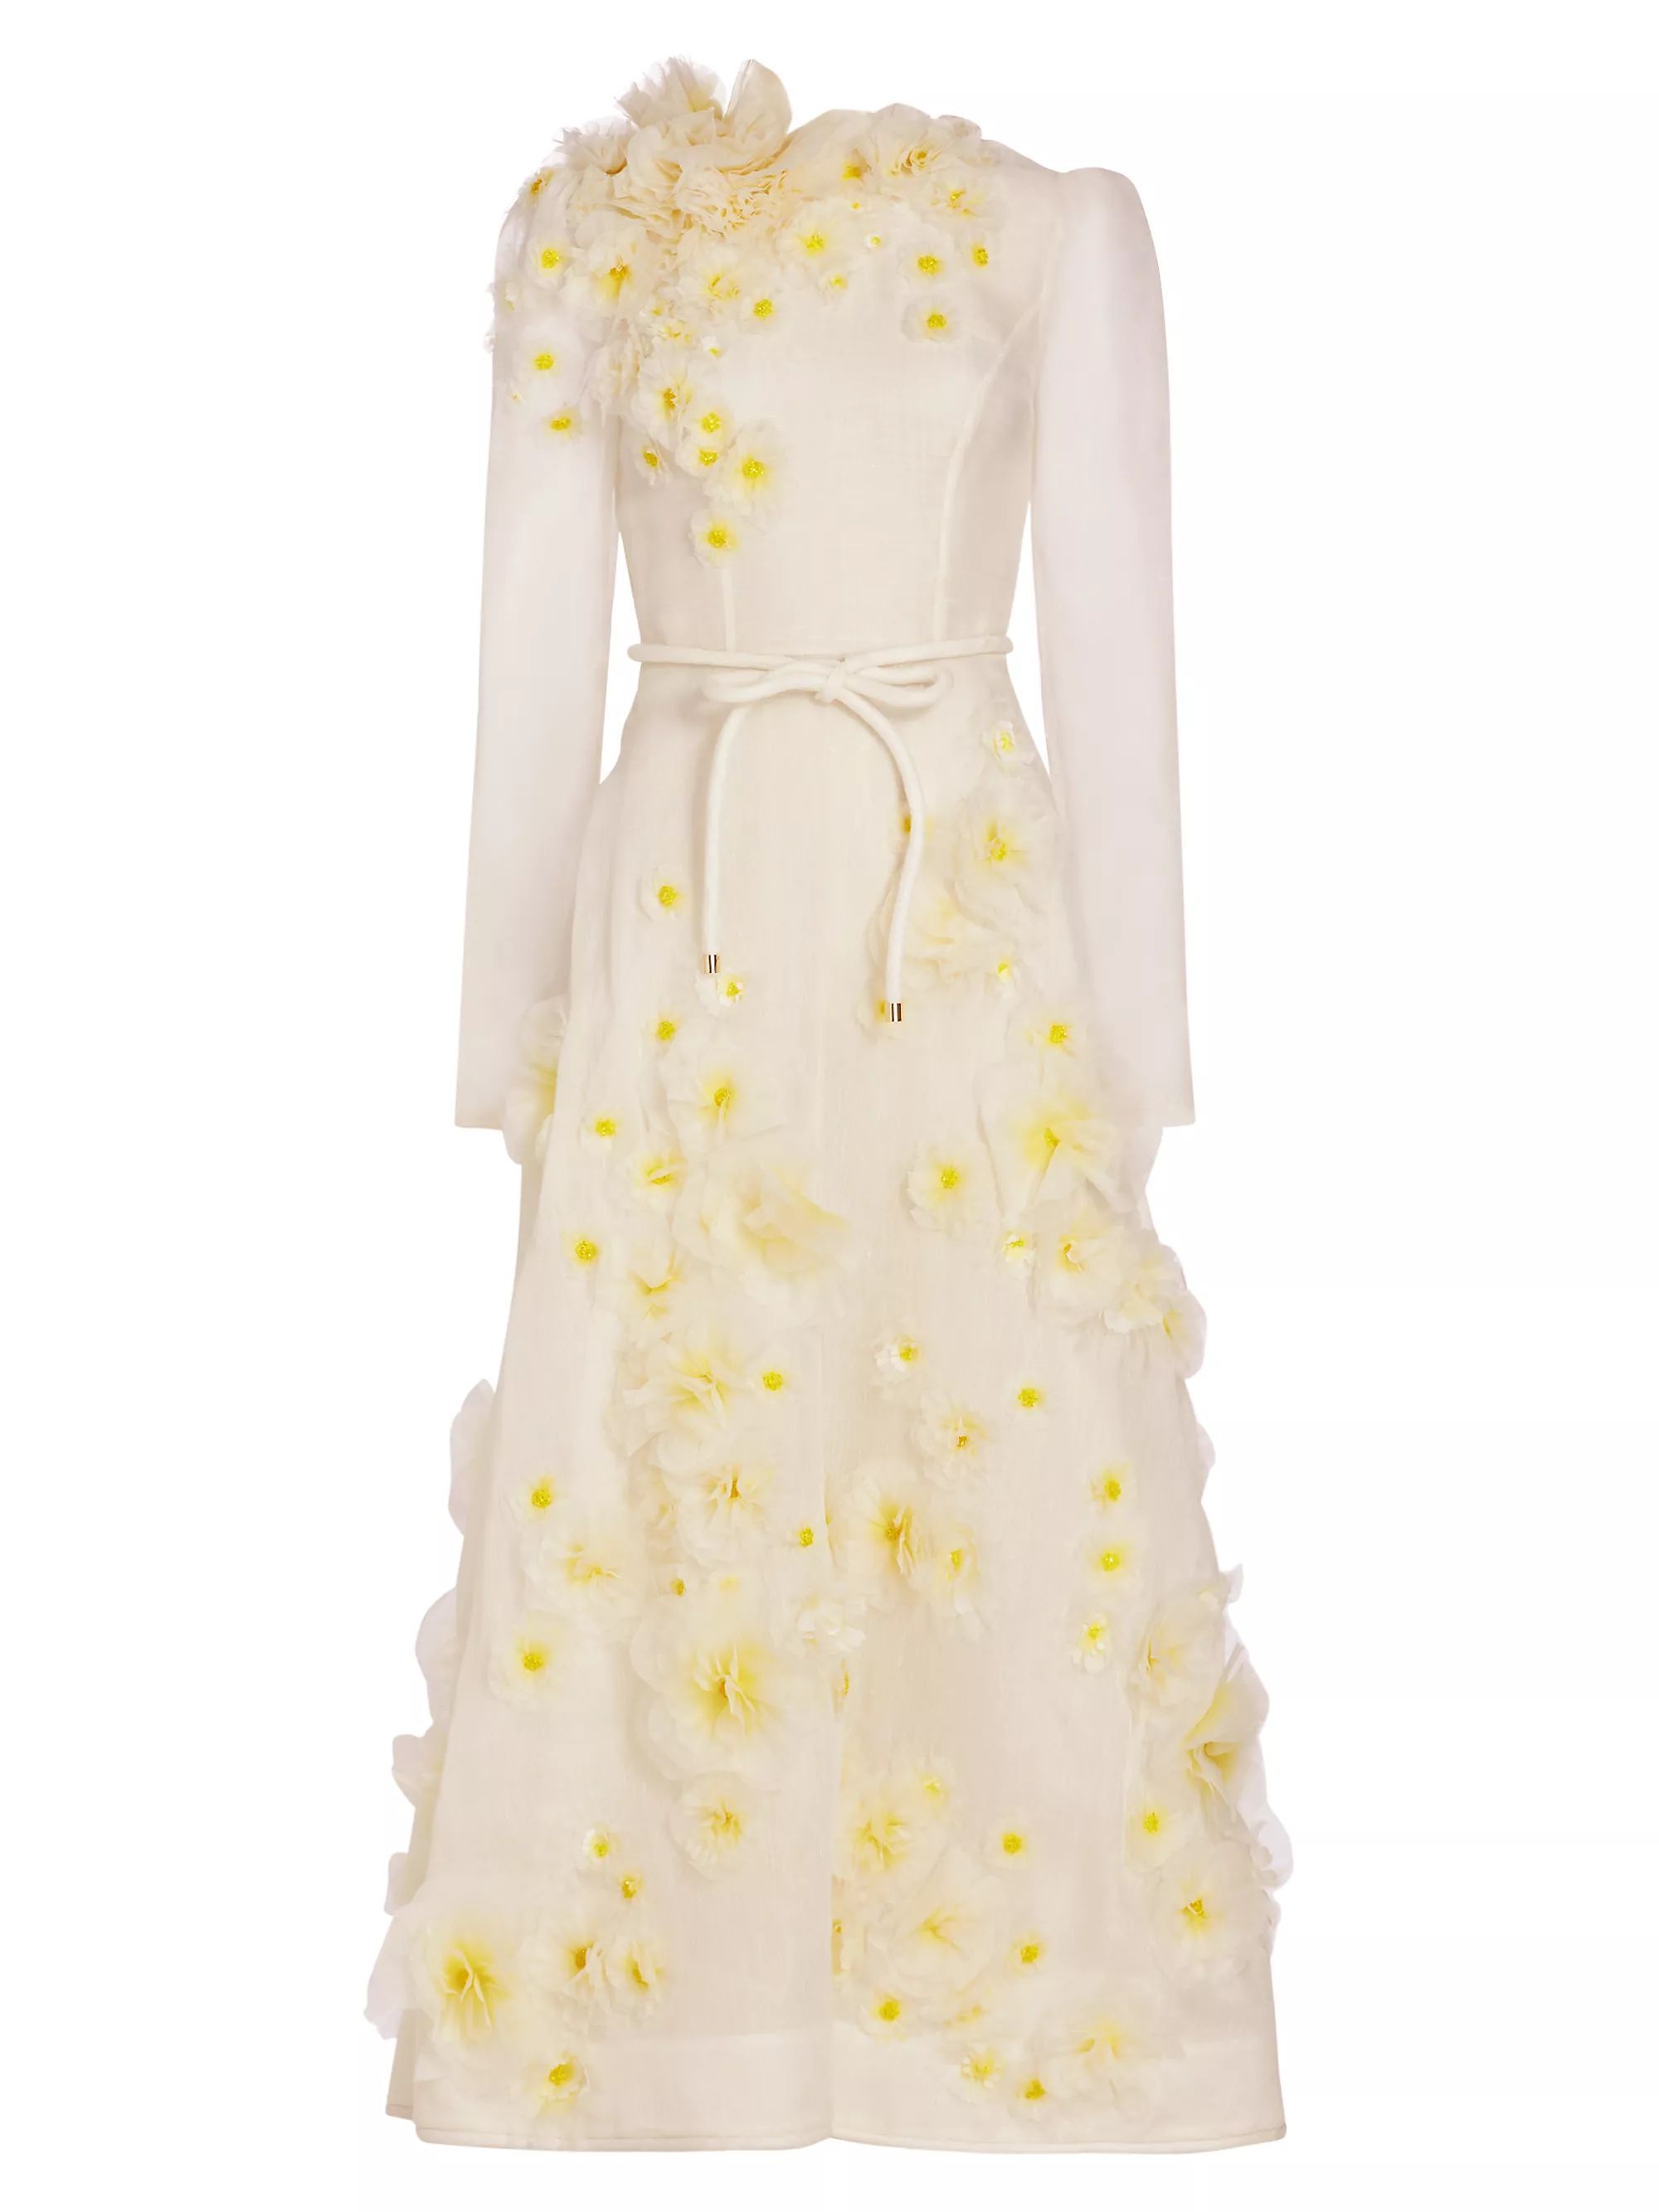 Matchmaker Daisy-Embellished Linen & Silk Dress | Saks Fifth Avenue